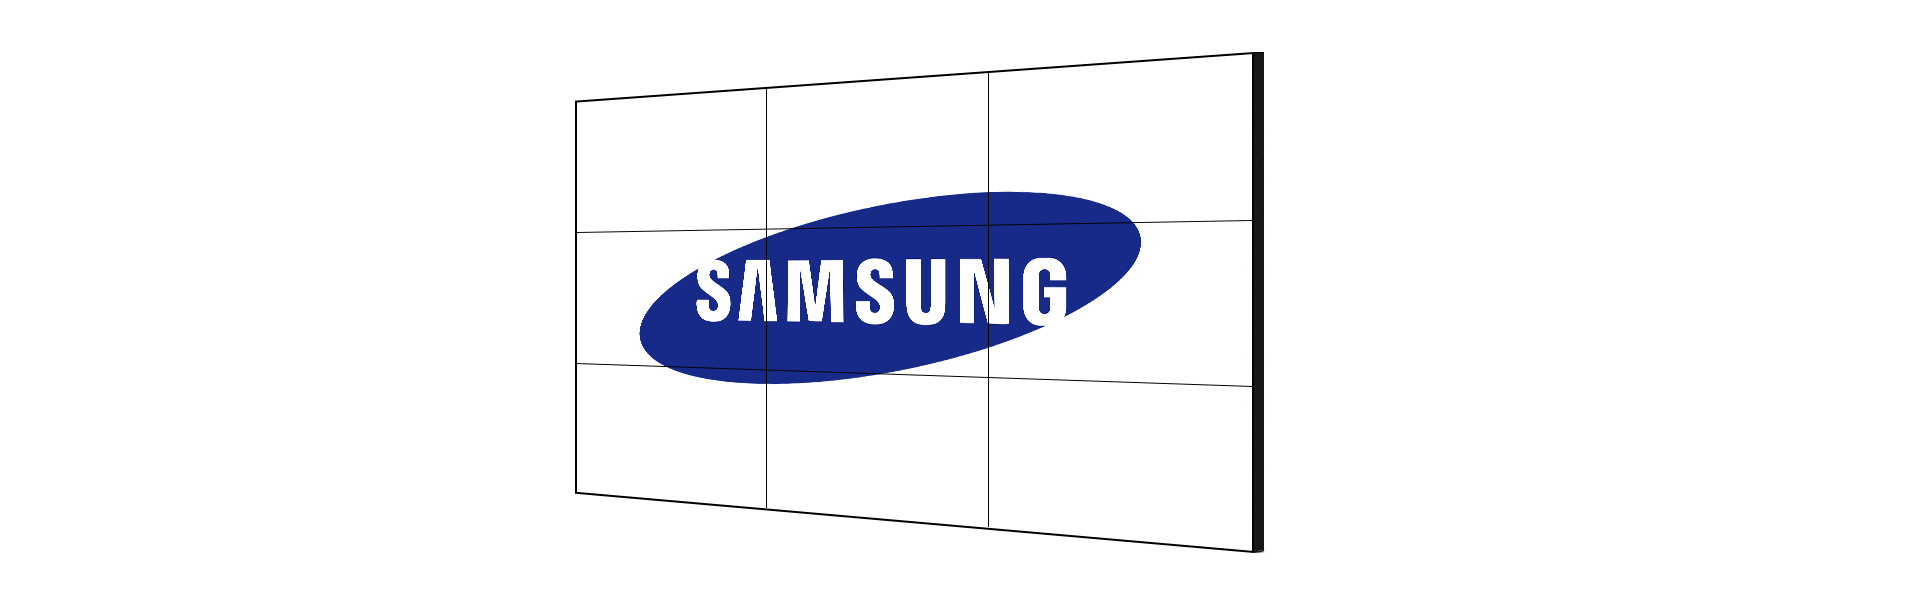 Samsung Panel Video Wall